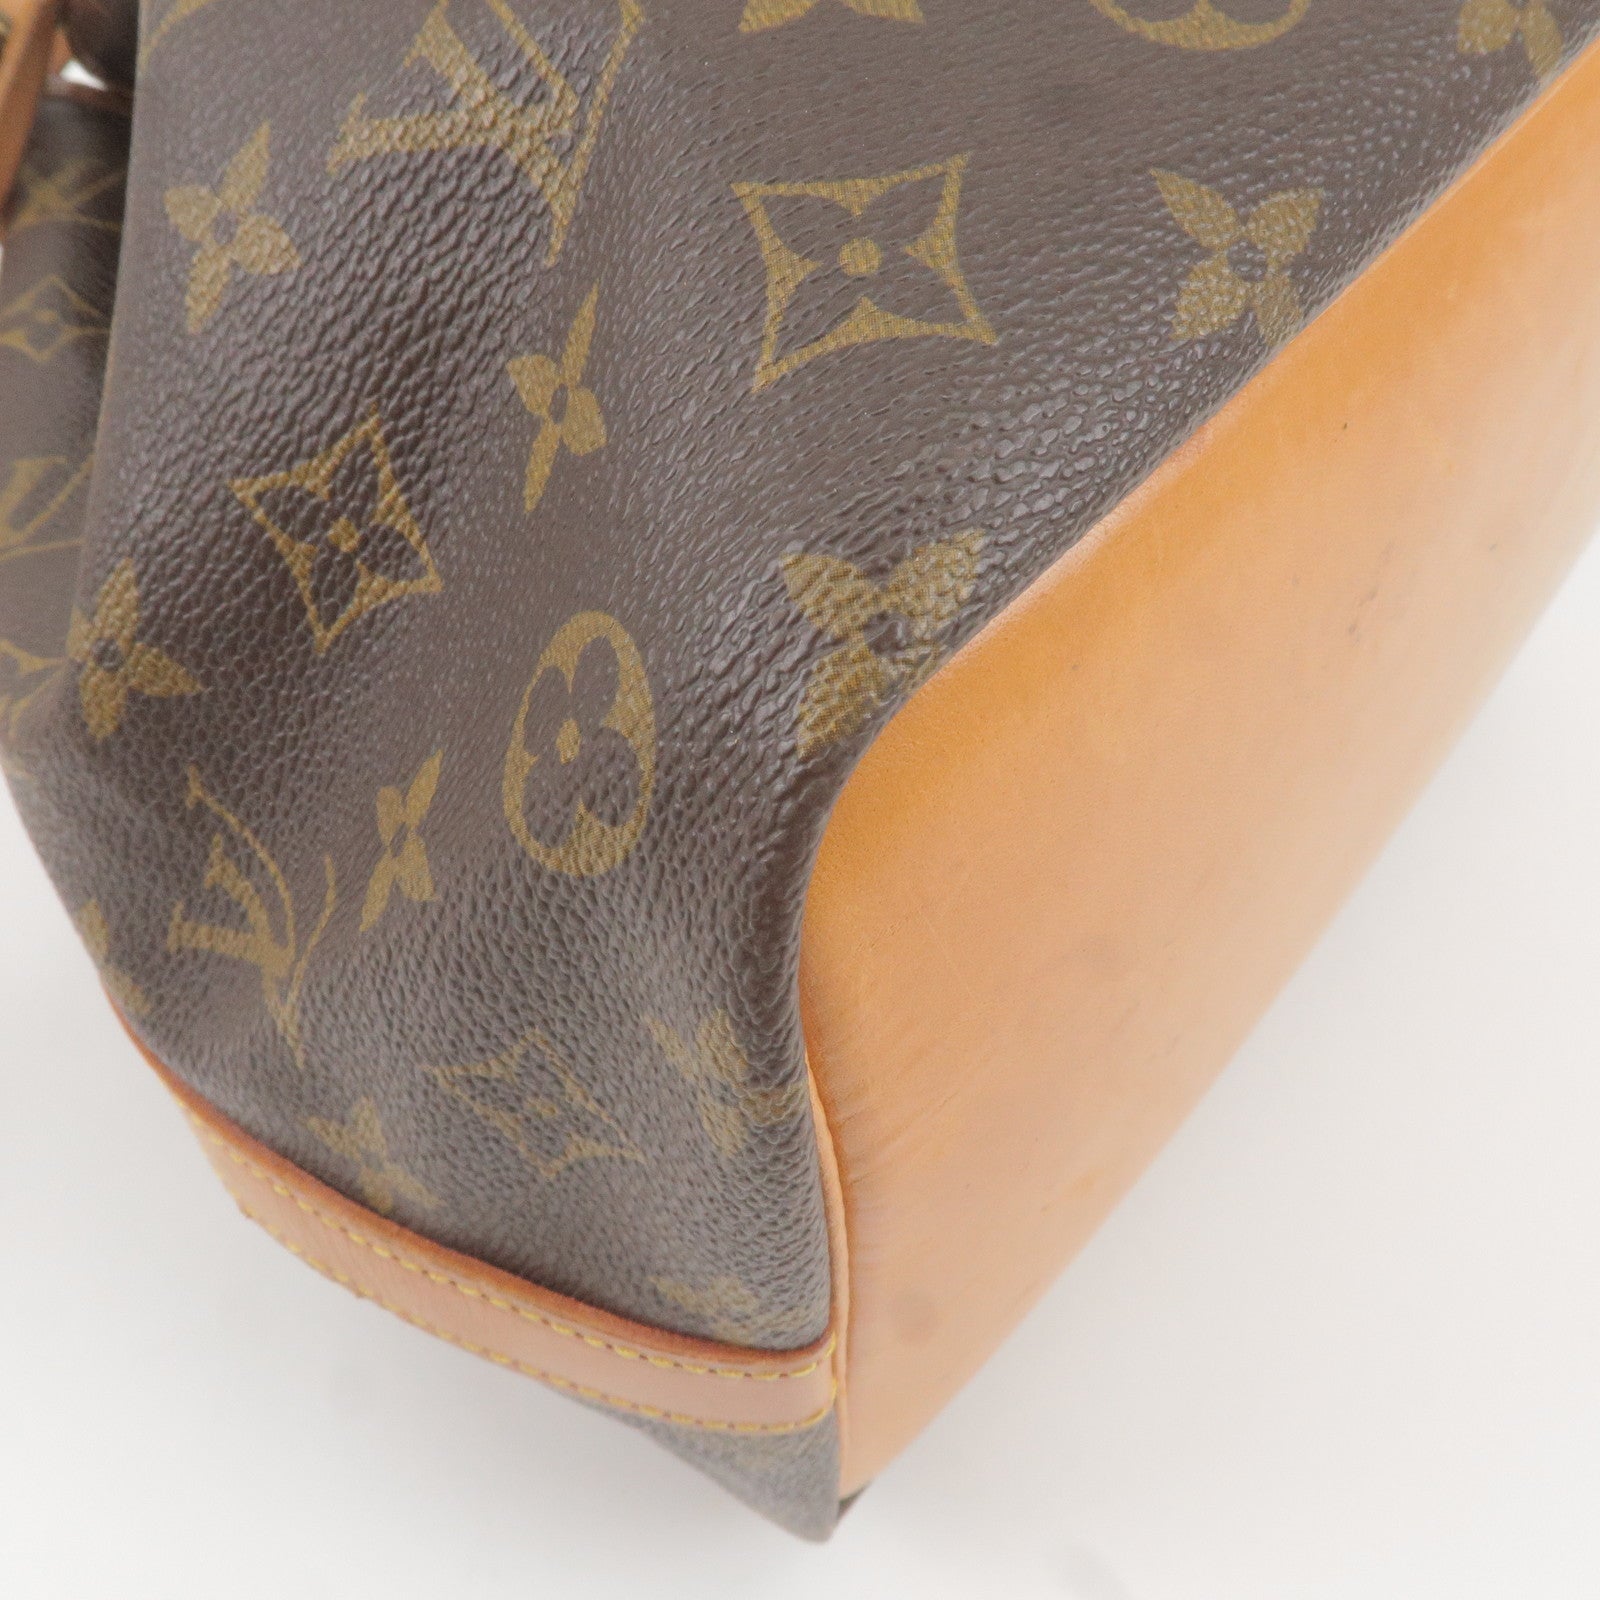 Noe - Vuitton - Petit - Bag - Monogram - Shoulder - Bag